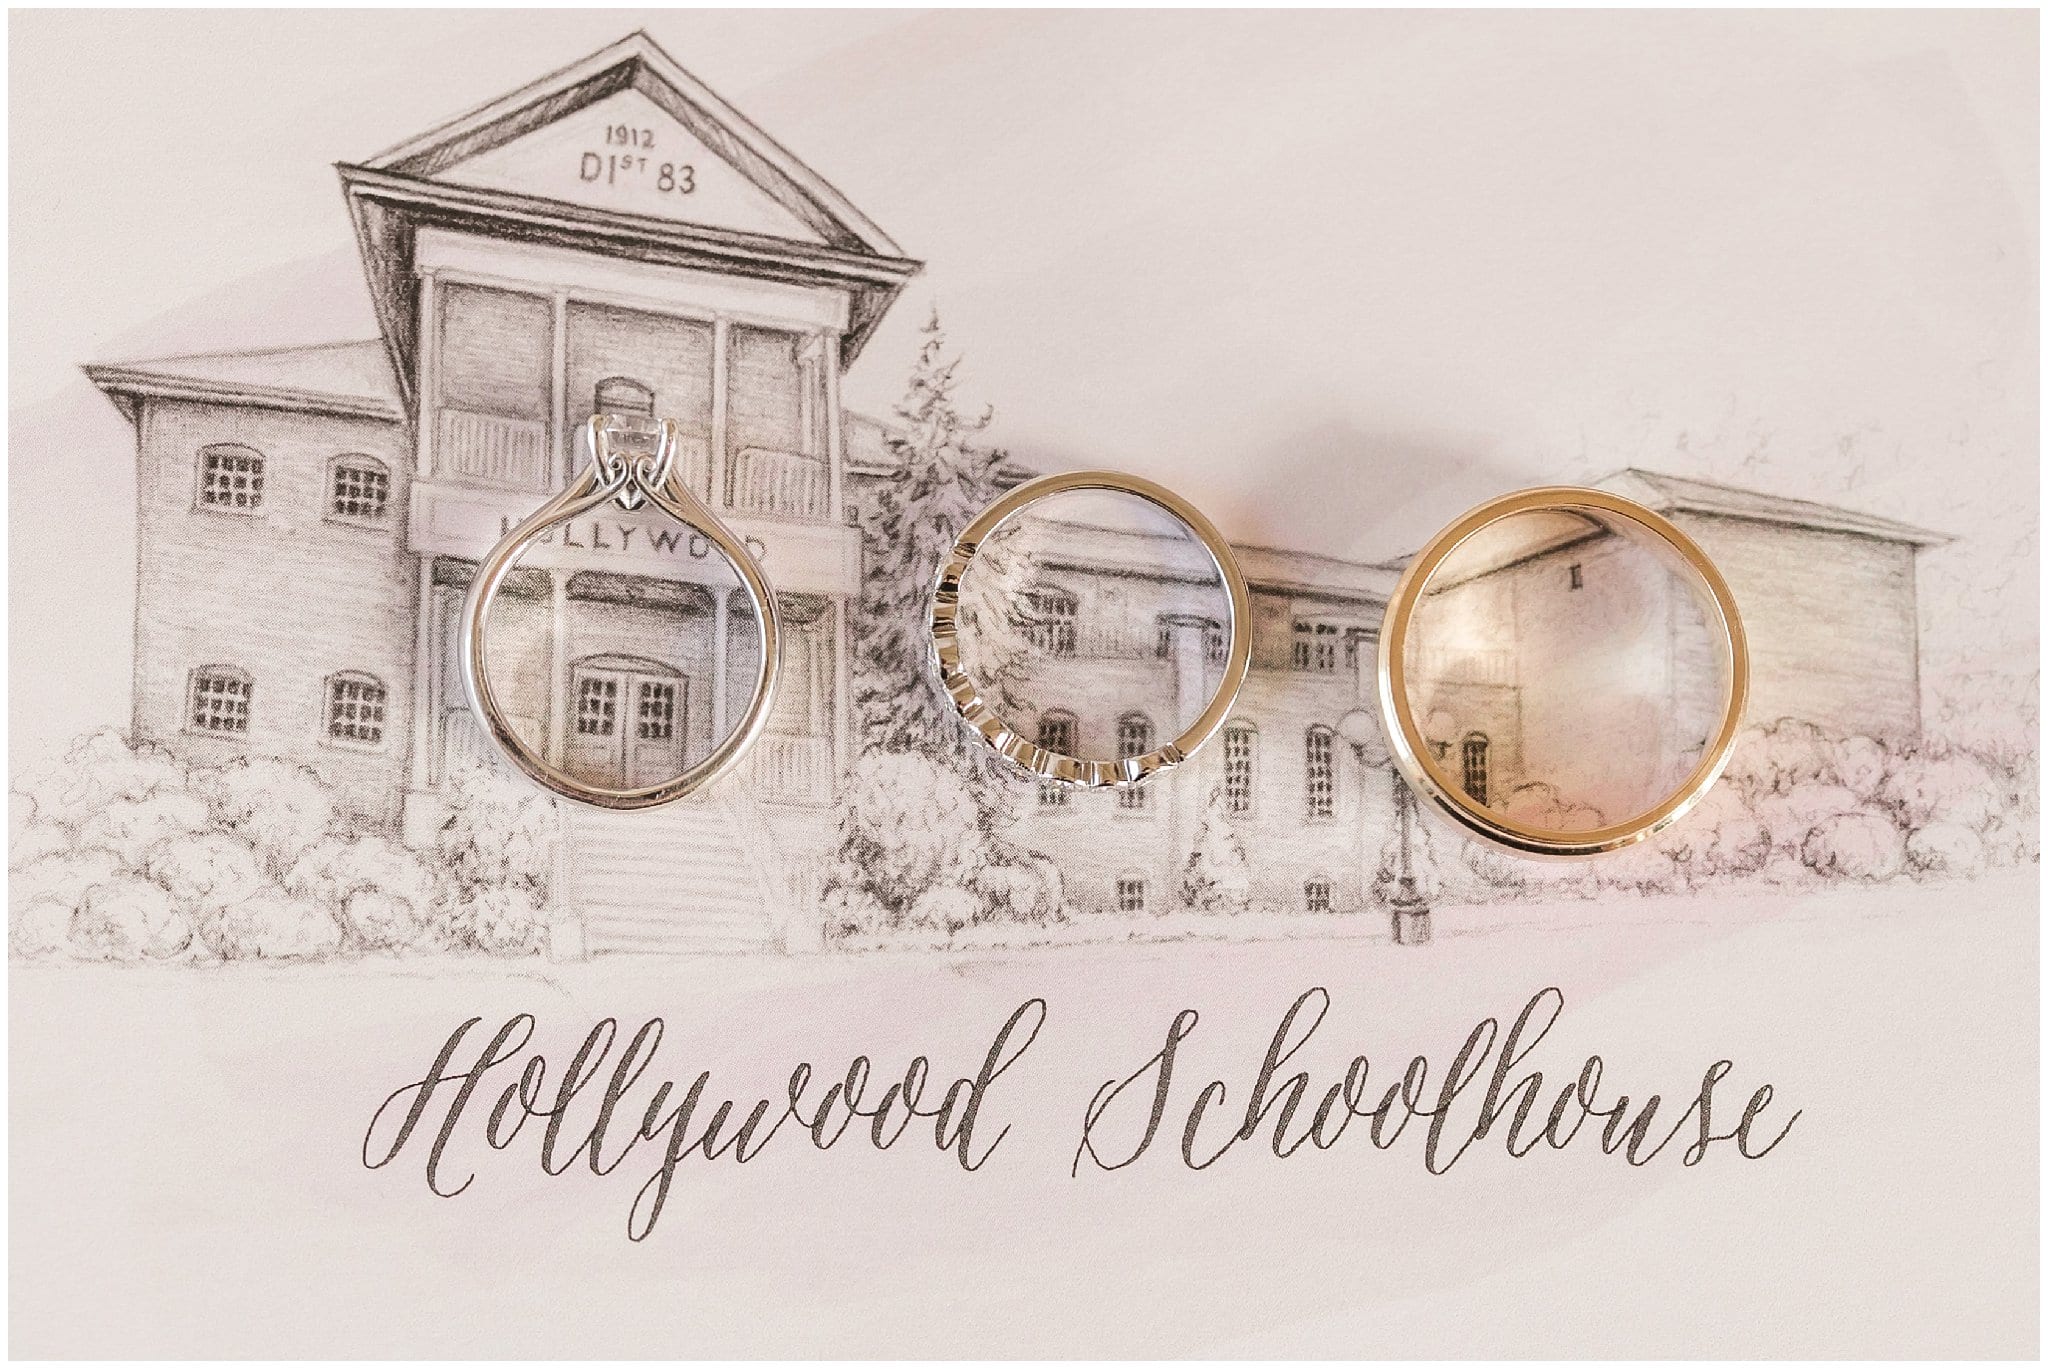 hollywood schoolhouse wedding, woodinville wedding, seattle wedding photographer, weddings in woodinville